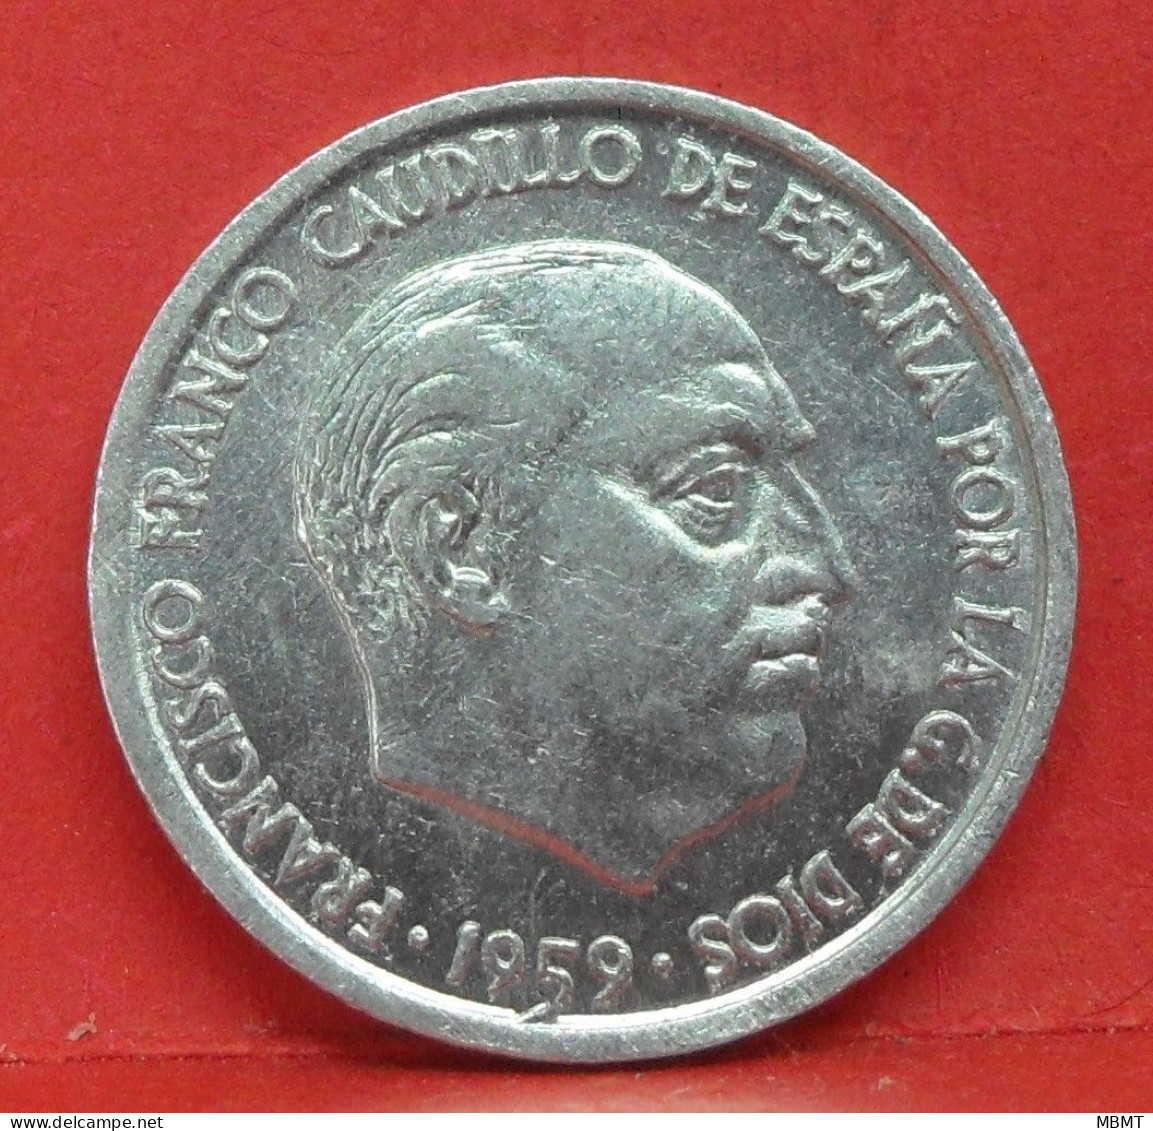 10 Centimos 1959 - SUP - Pièce Monnaie Espagne - Article N°2209 - 10 Centimos